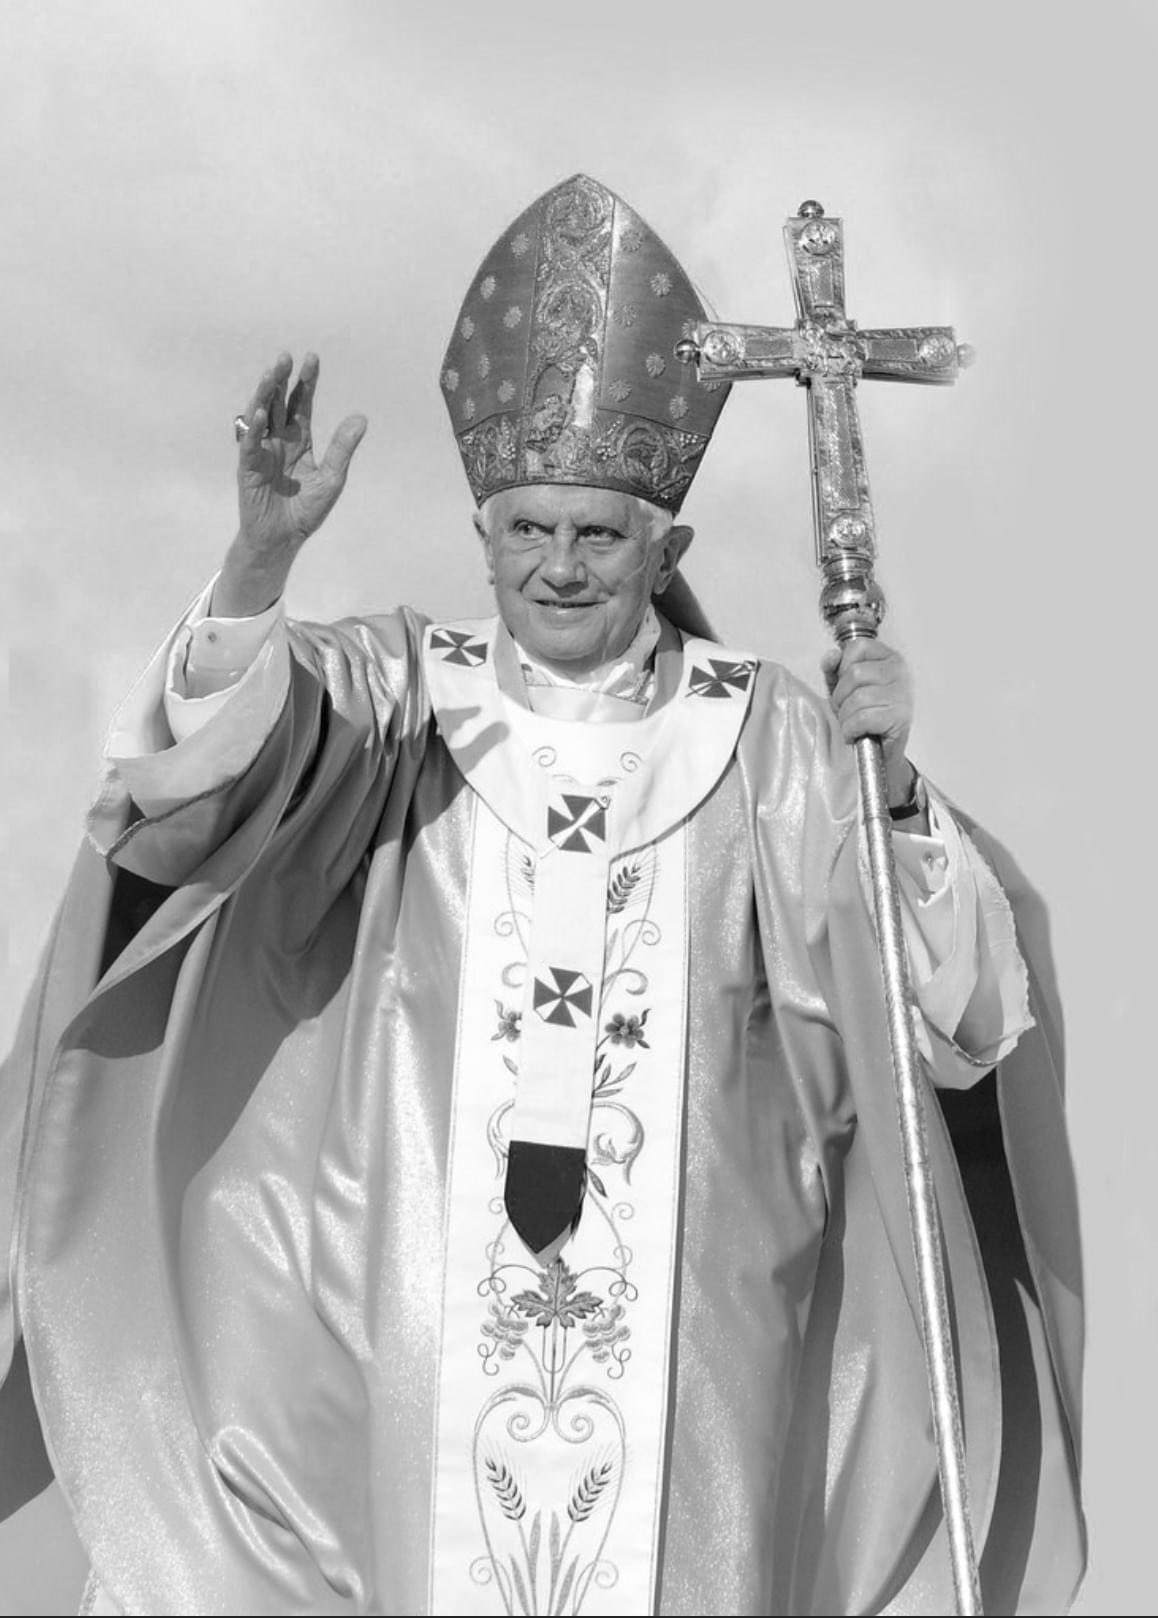 Pope Emeritus Benedict XVI passed away at 95